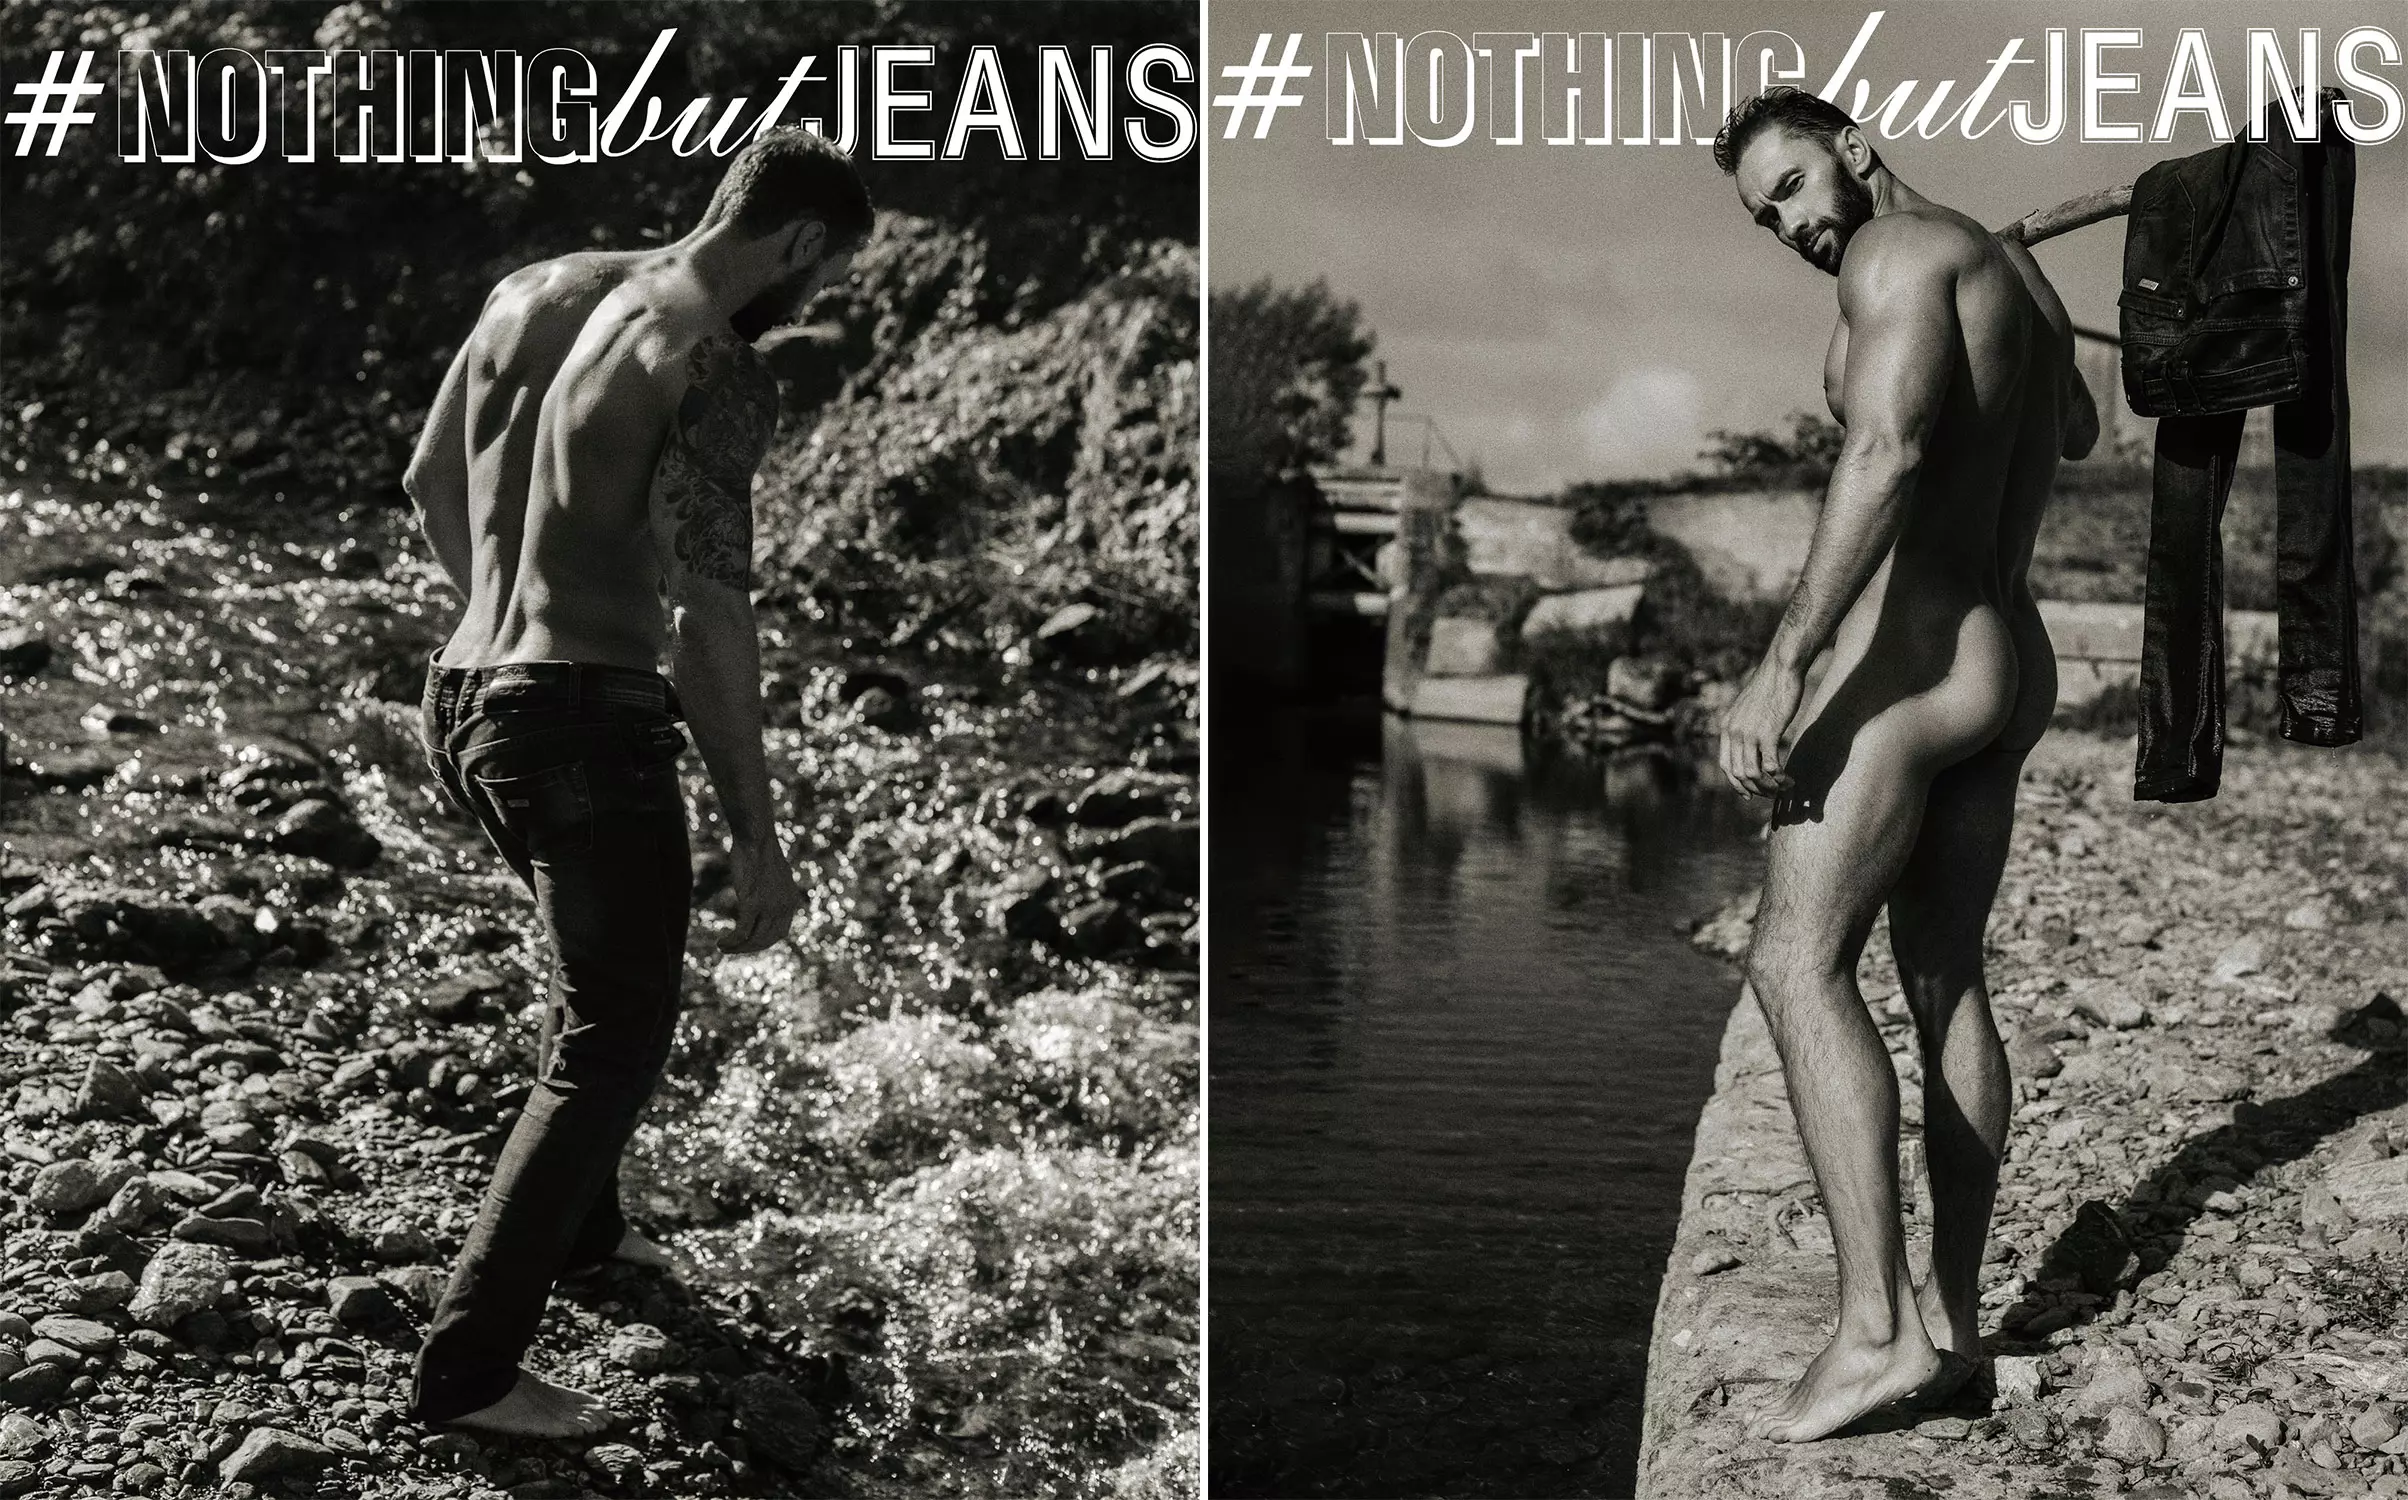 Ini Mikhail Fomin di #NothingButJeans oleh Serge Lee